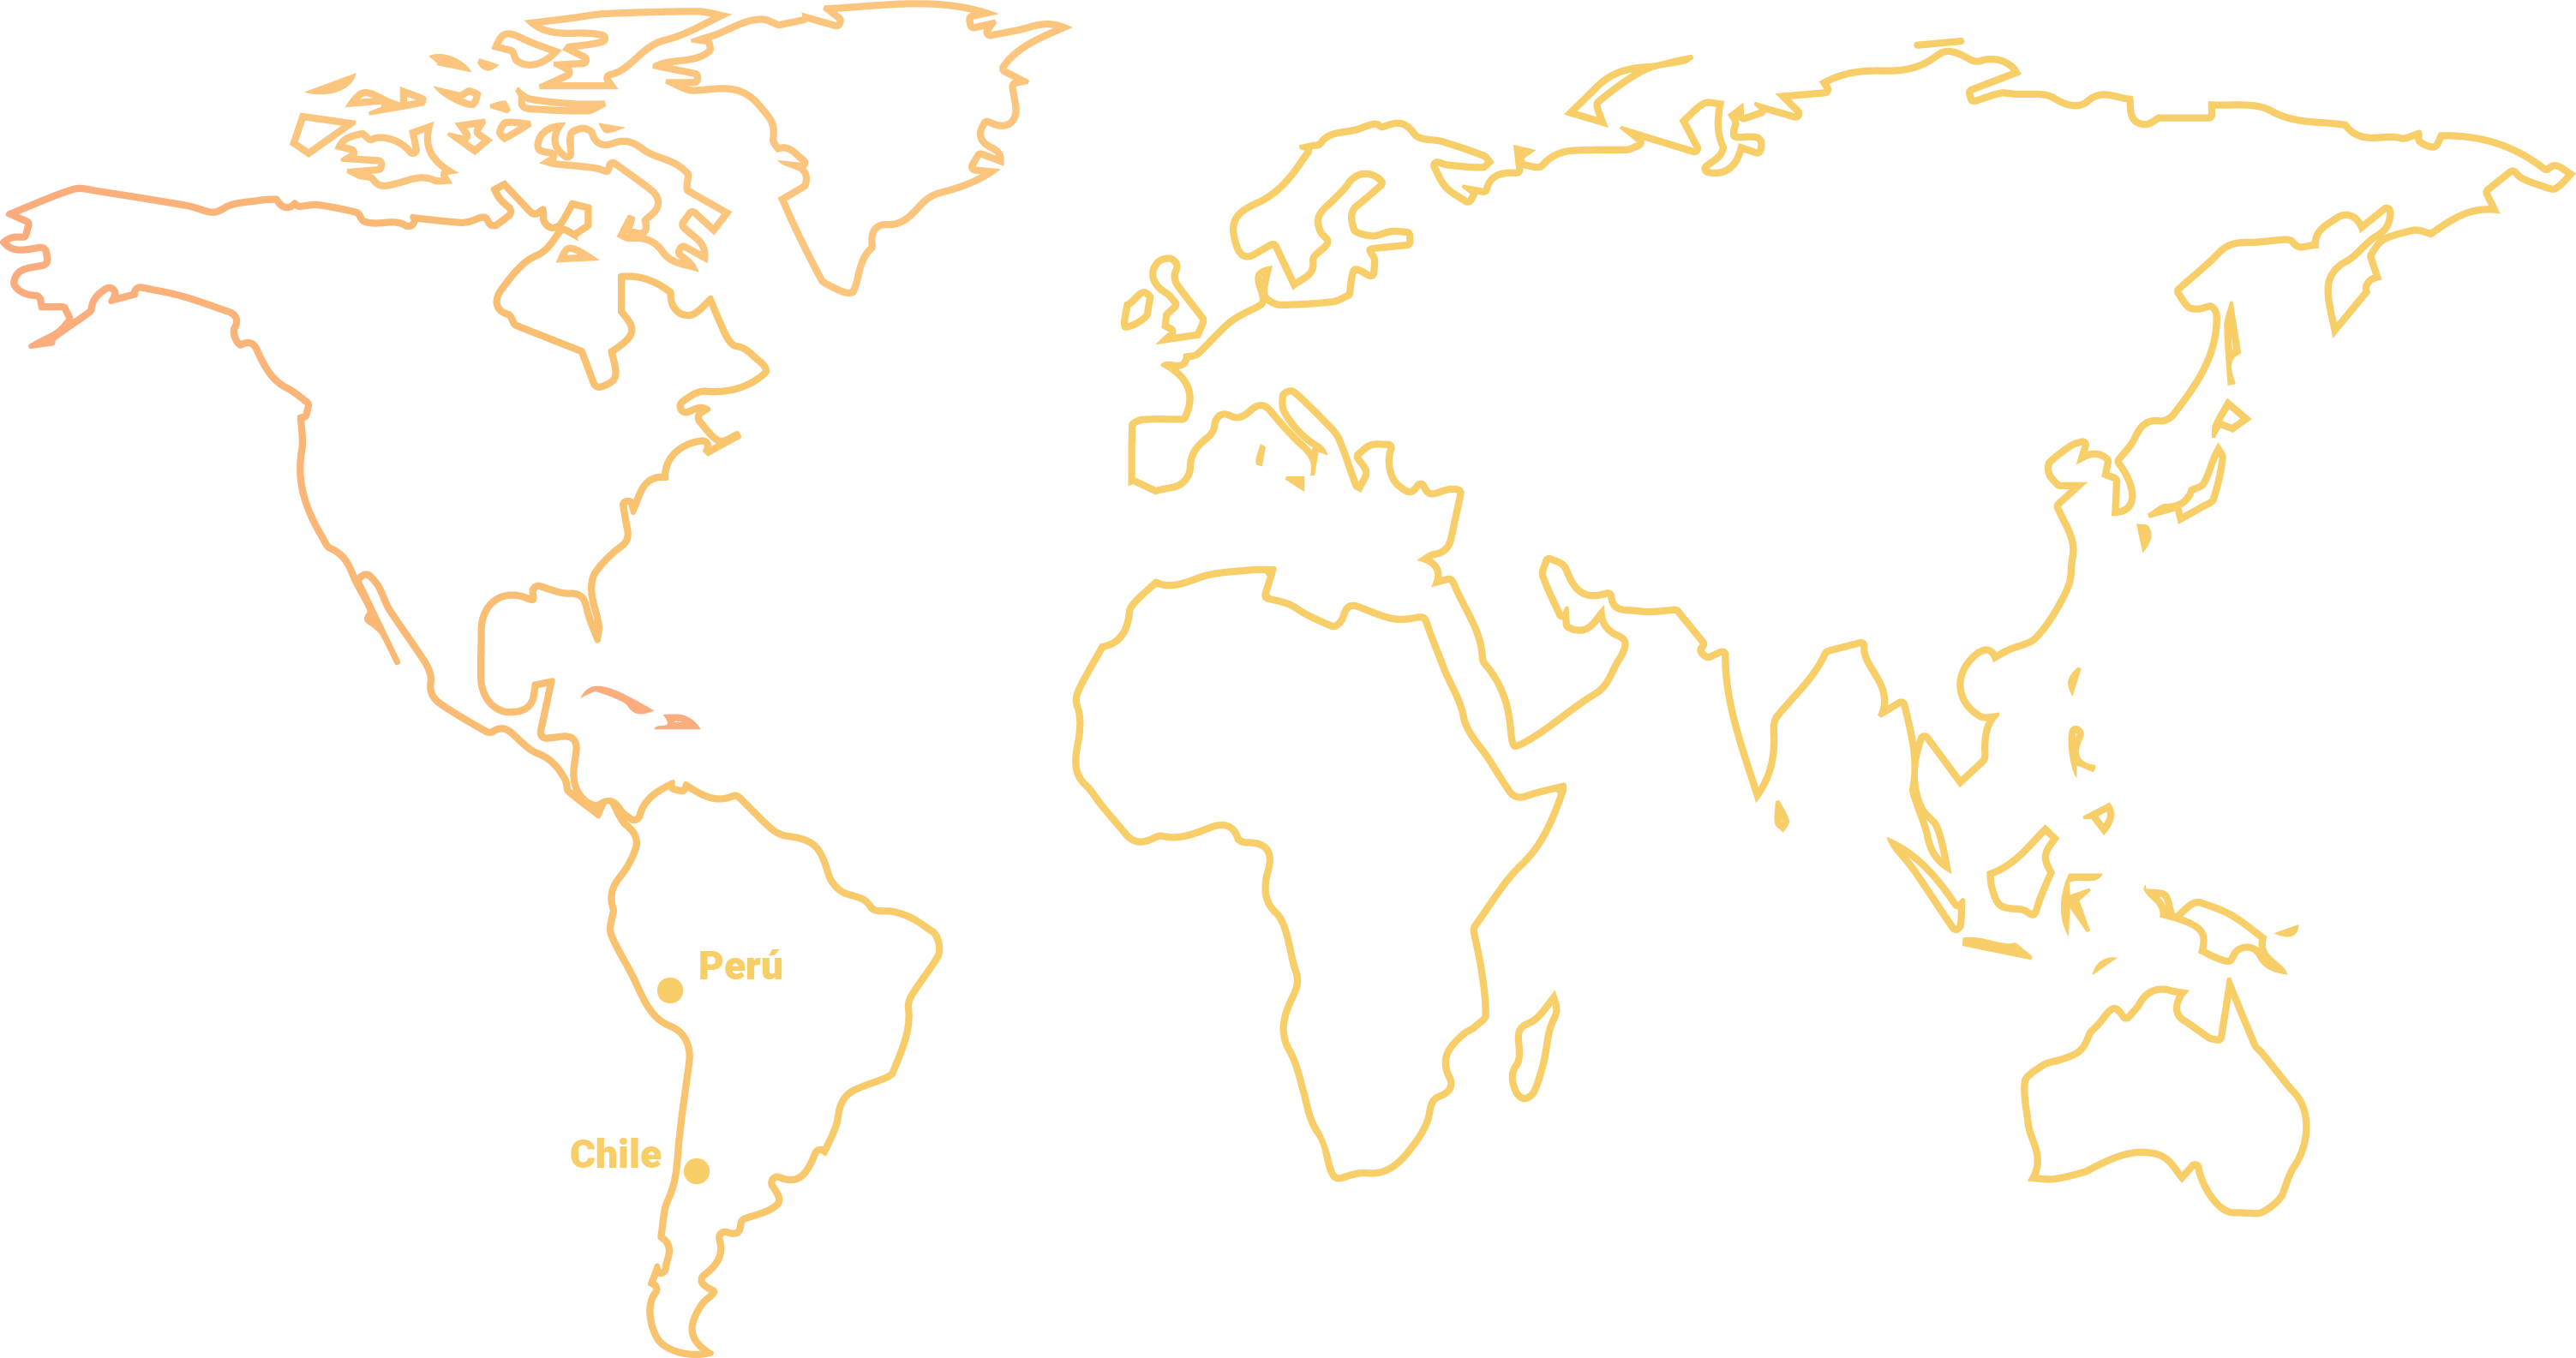 Map of world marking Chile and Peru